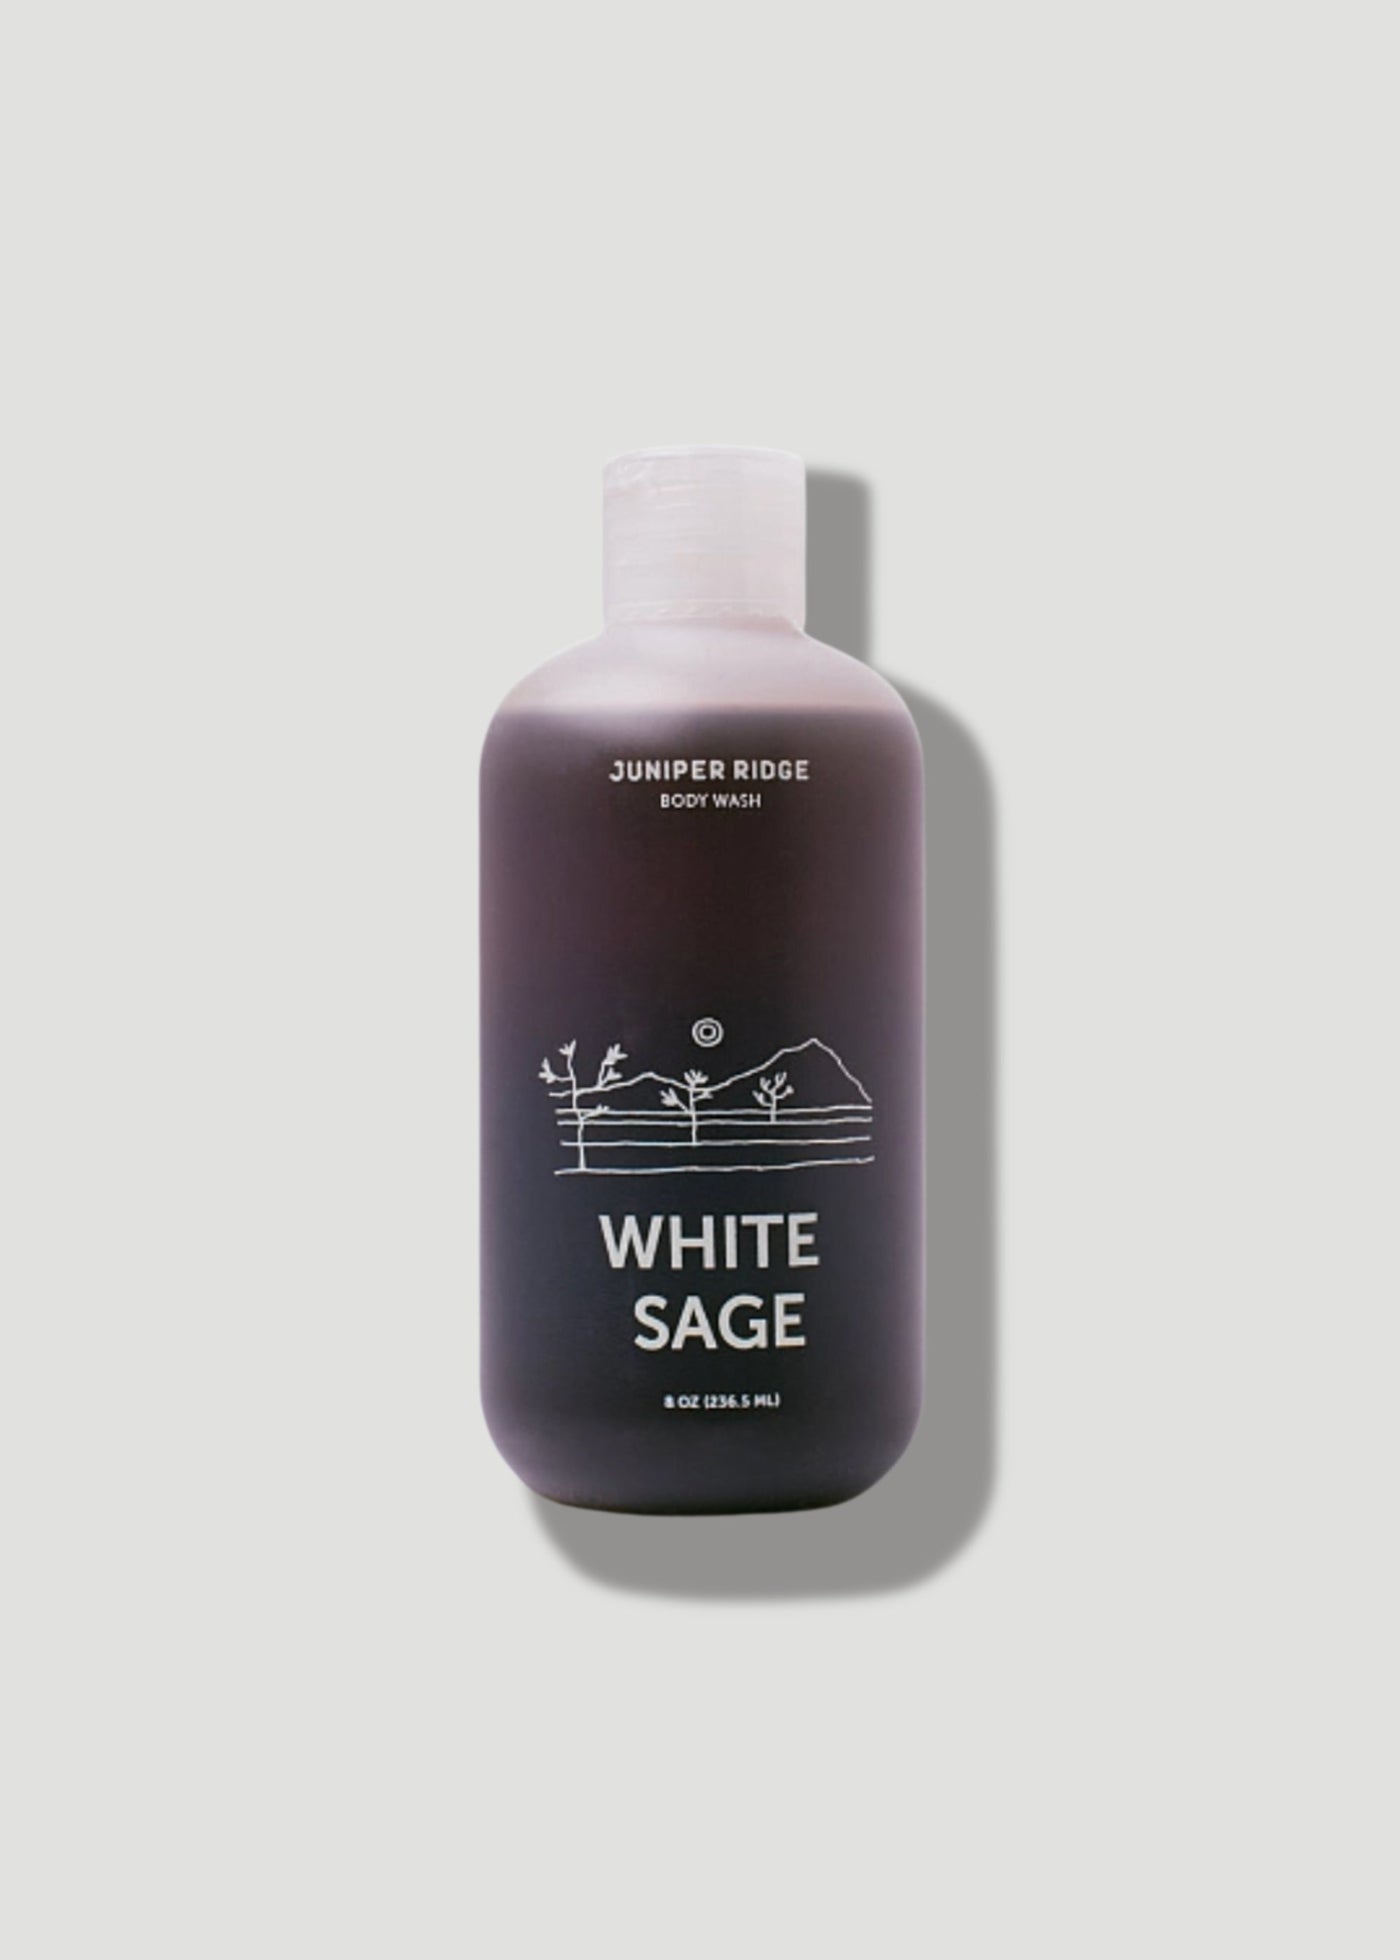 Juniper Ridge Body Wash - White Sage